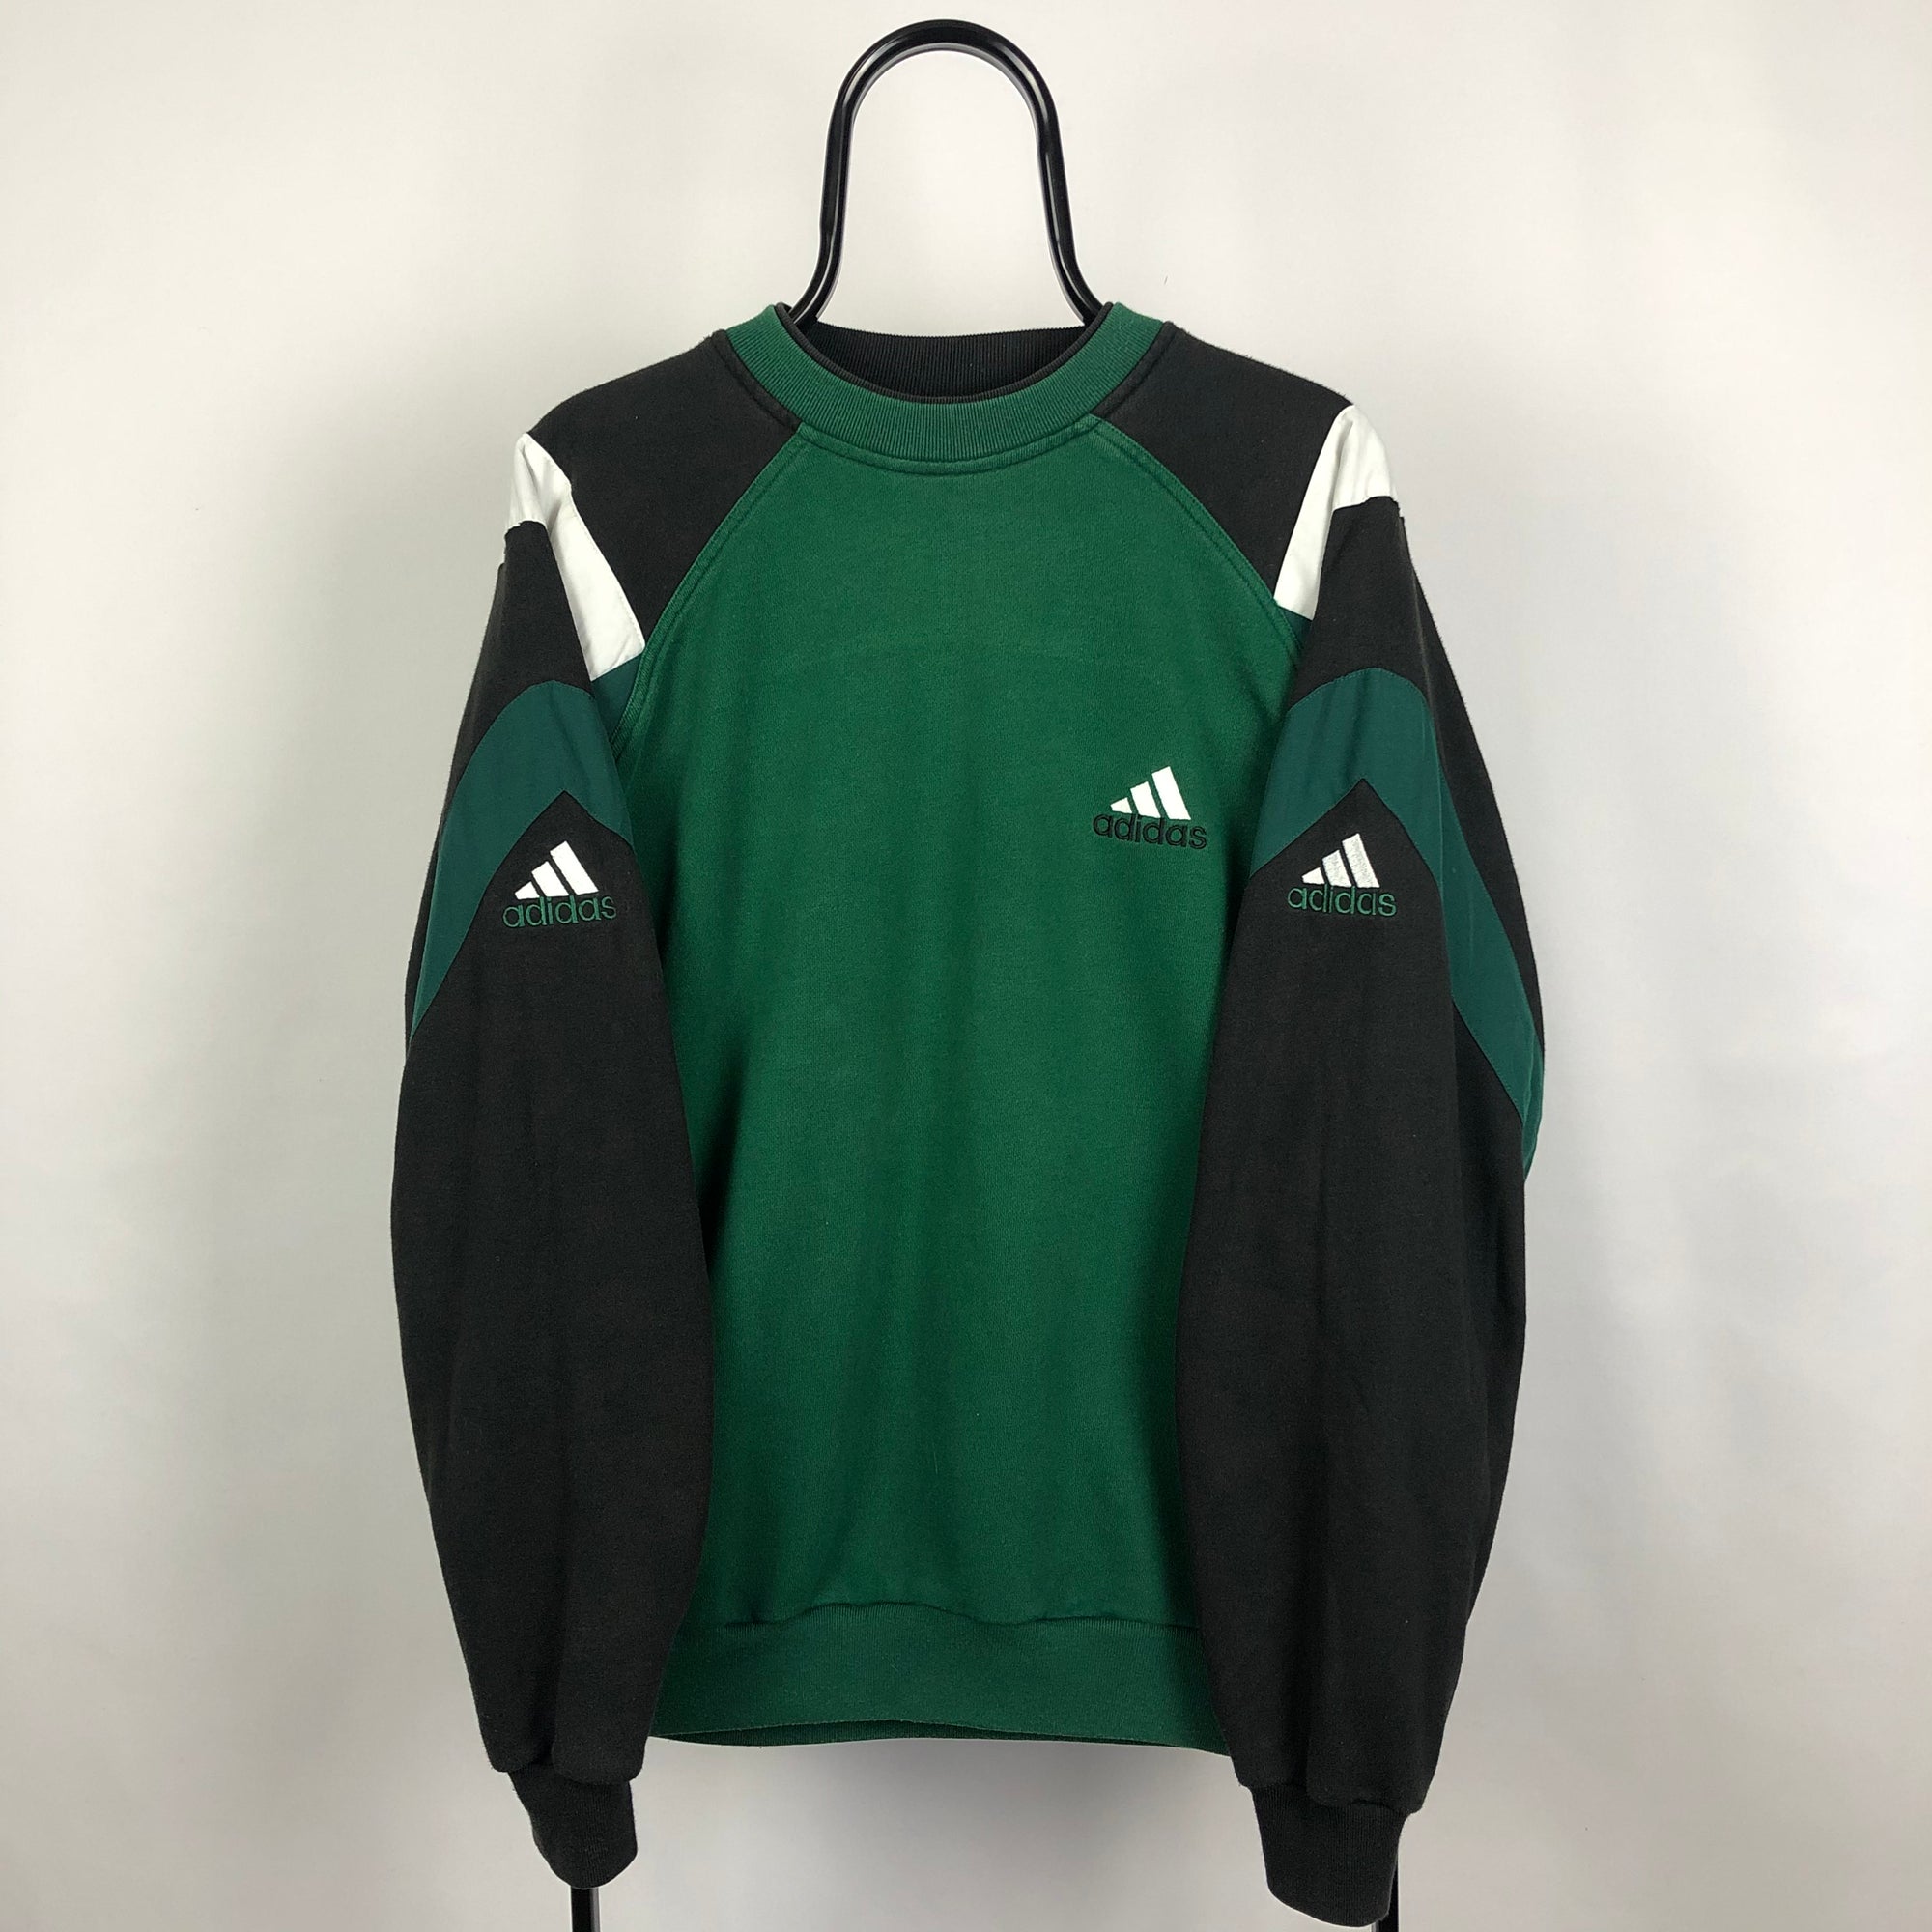 Adidas Tricolour Sweatshirt - Men's Large/Women's XL